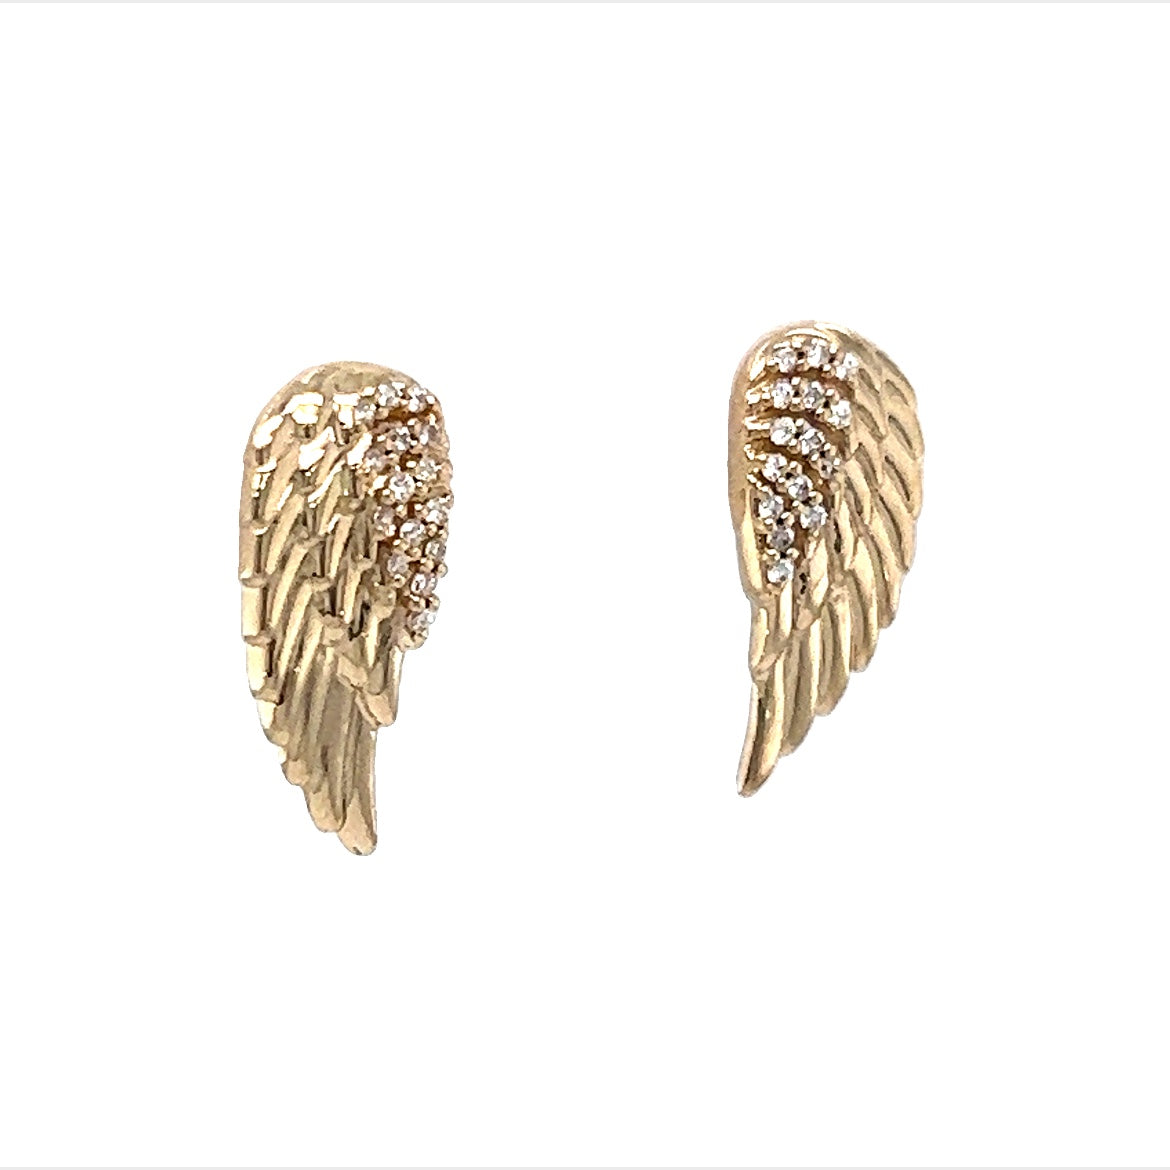 Pave Diamond Angel Wing Stud Earrings in 14K Yellow Gold